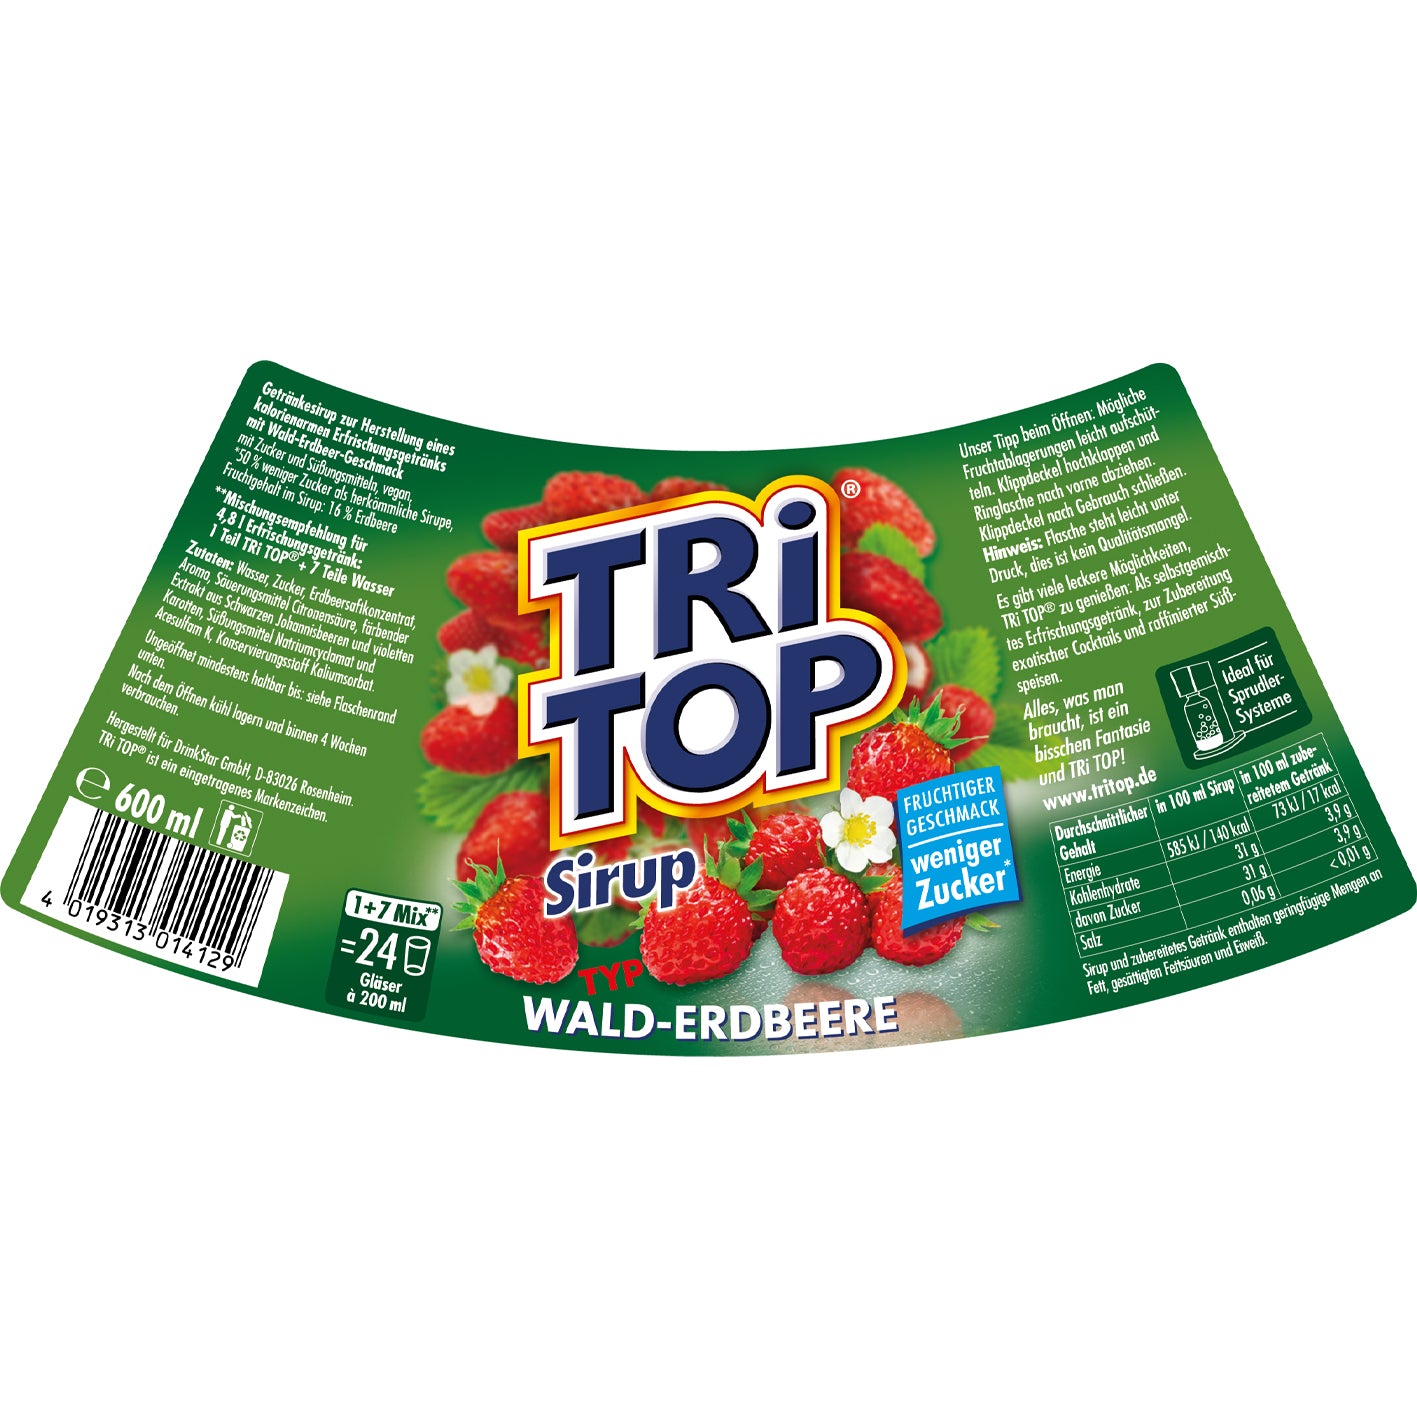 TRi TOP Sirup Wald-Erdbeere 6er-Set - 6x 600 ml